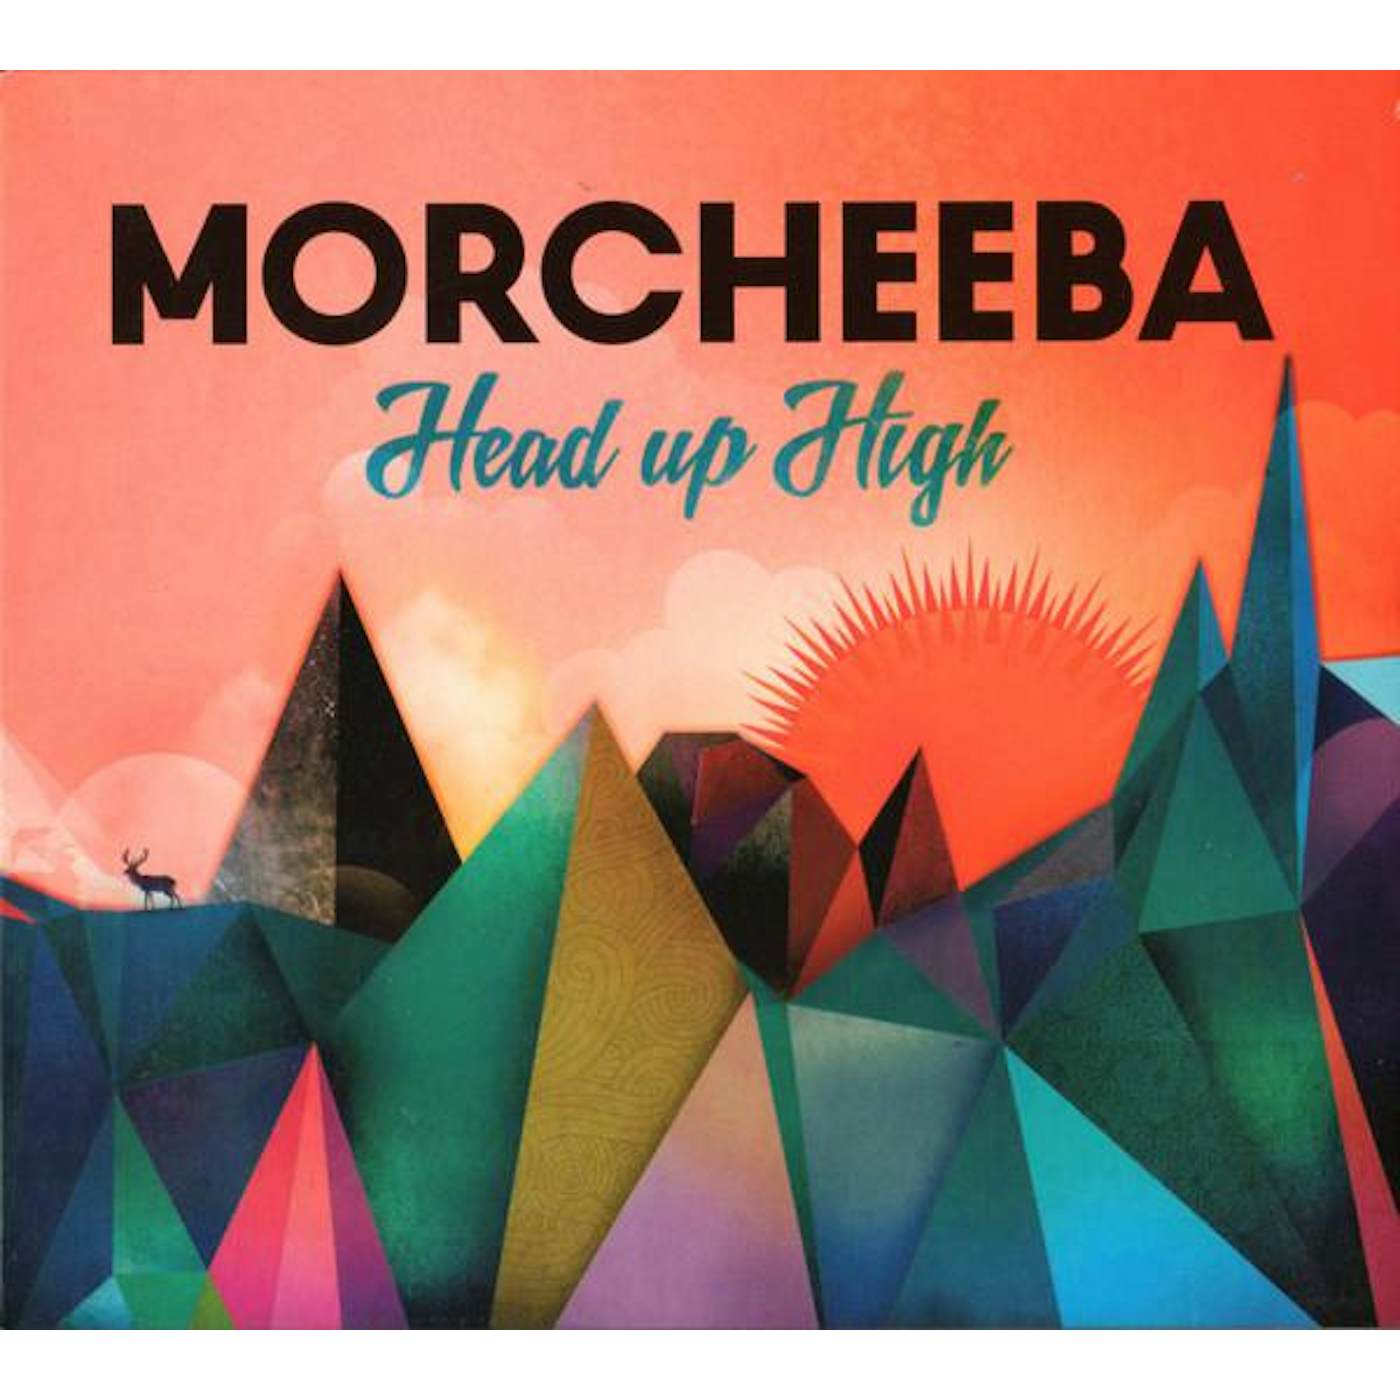 Morcheeba HEAD UP HIGH CD